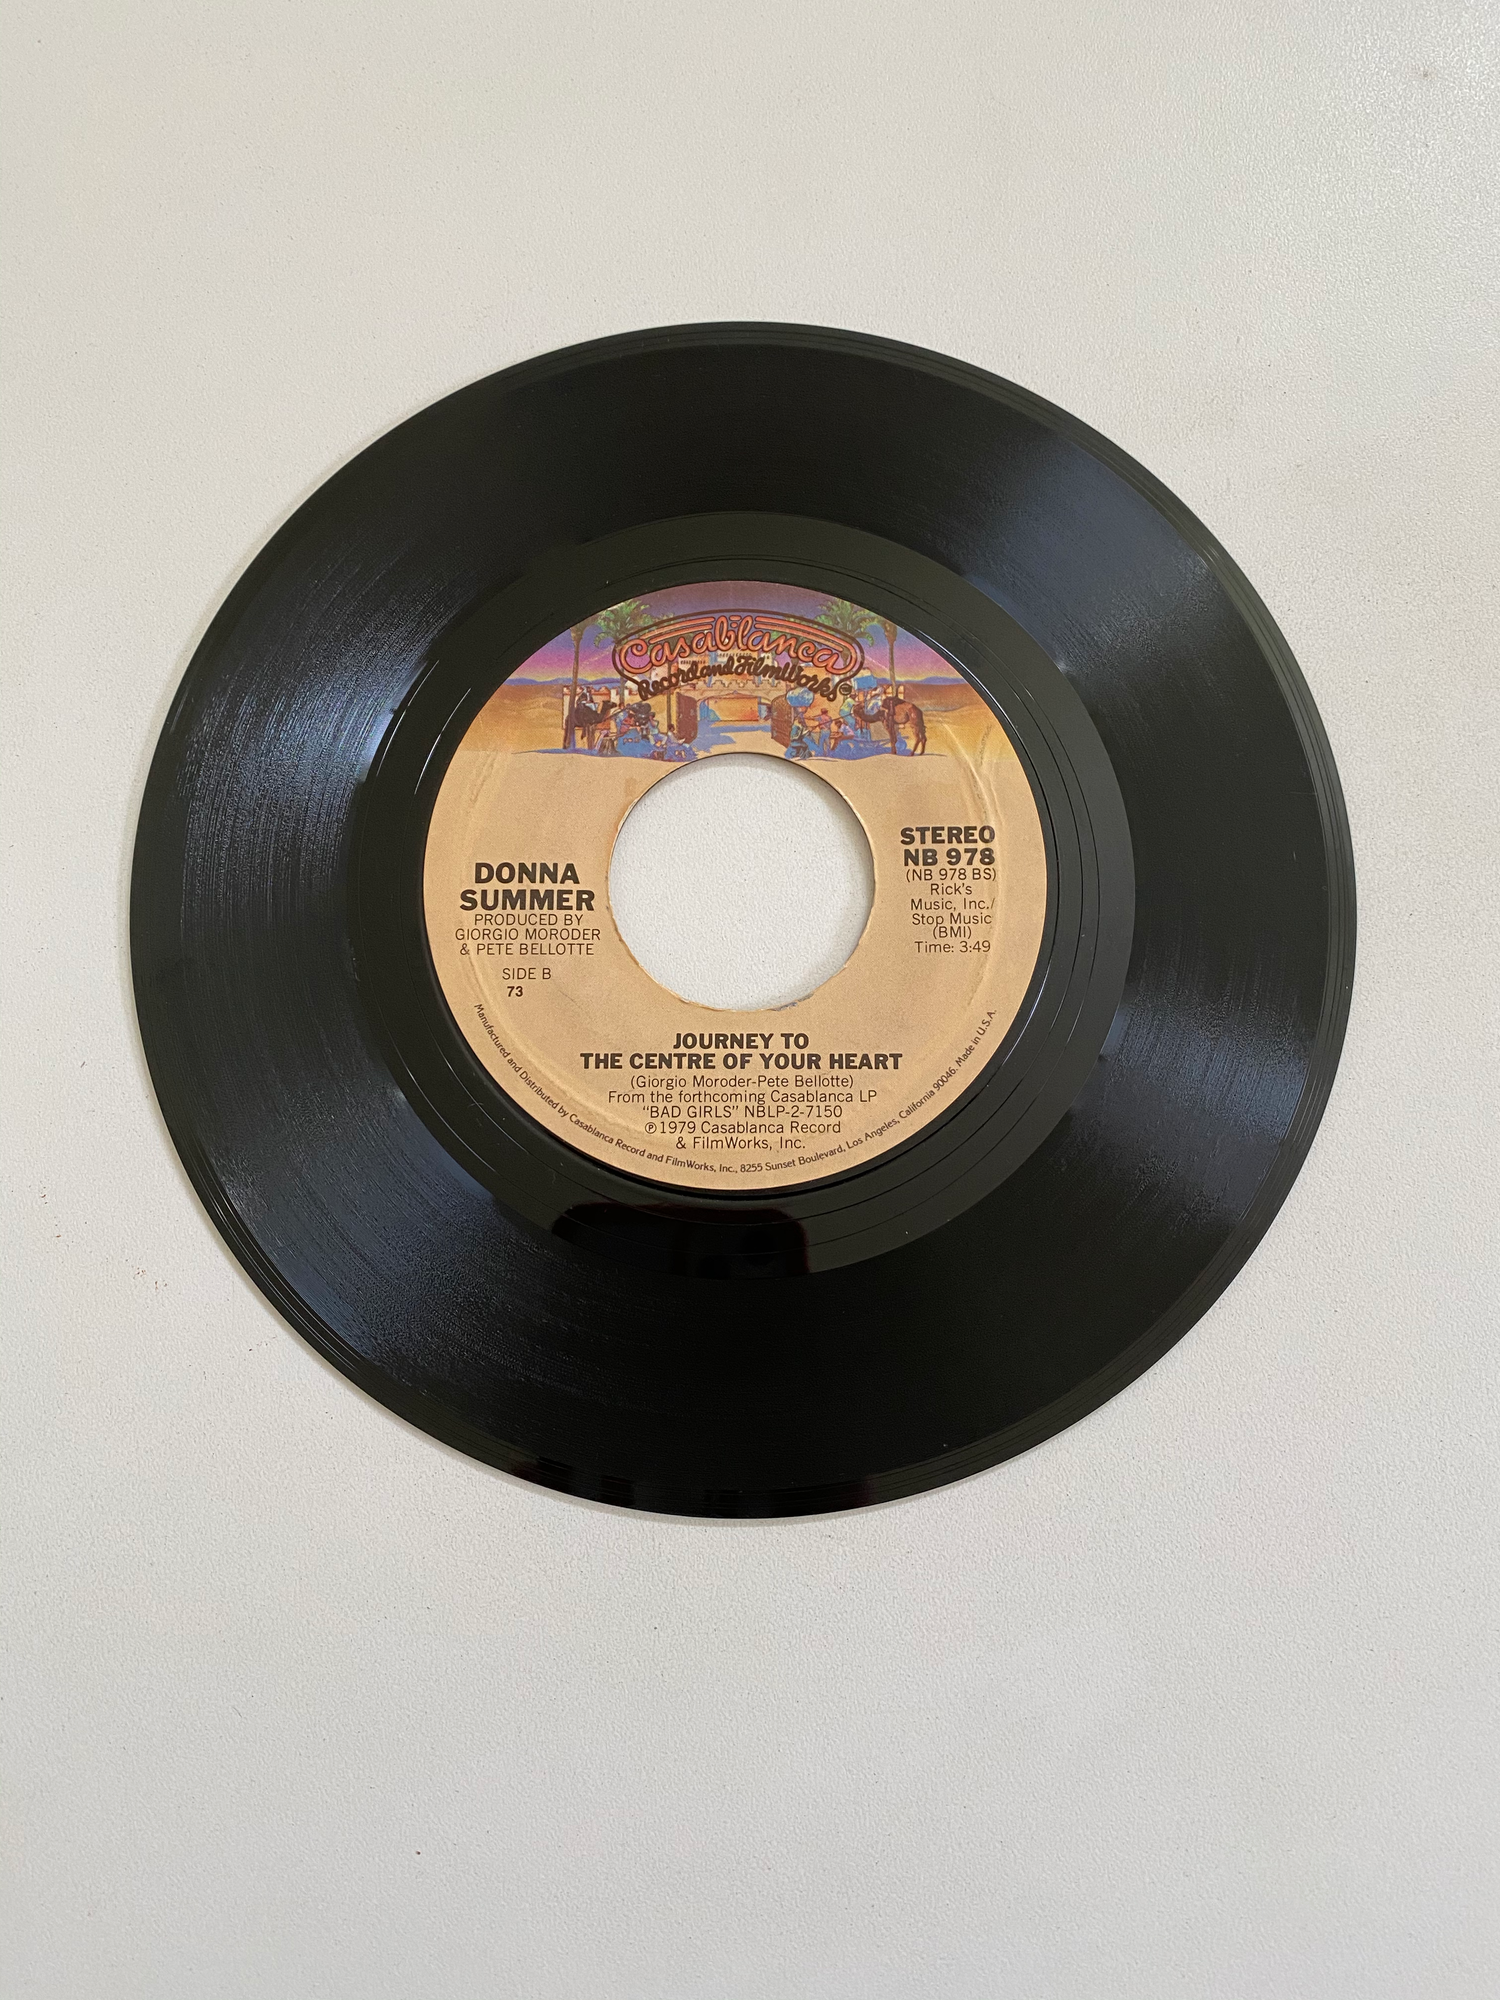 Donna Summer - Hot Stuff | 45 The Vintedge Co.